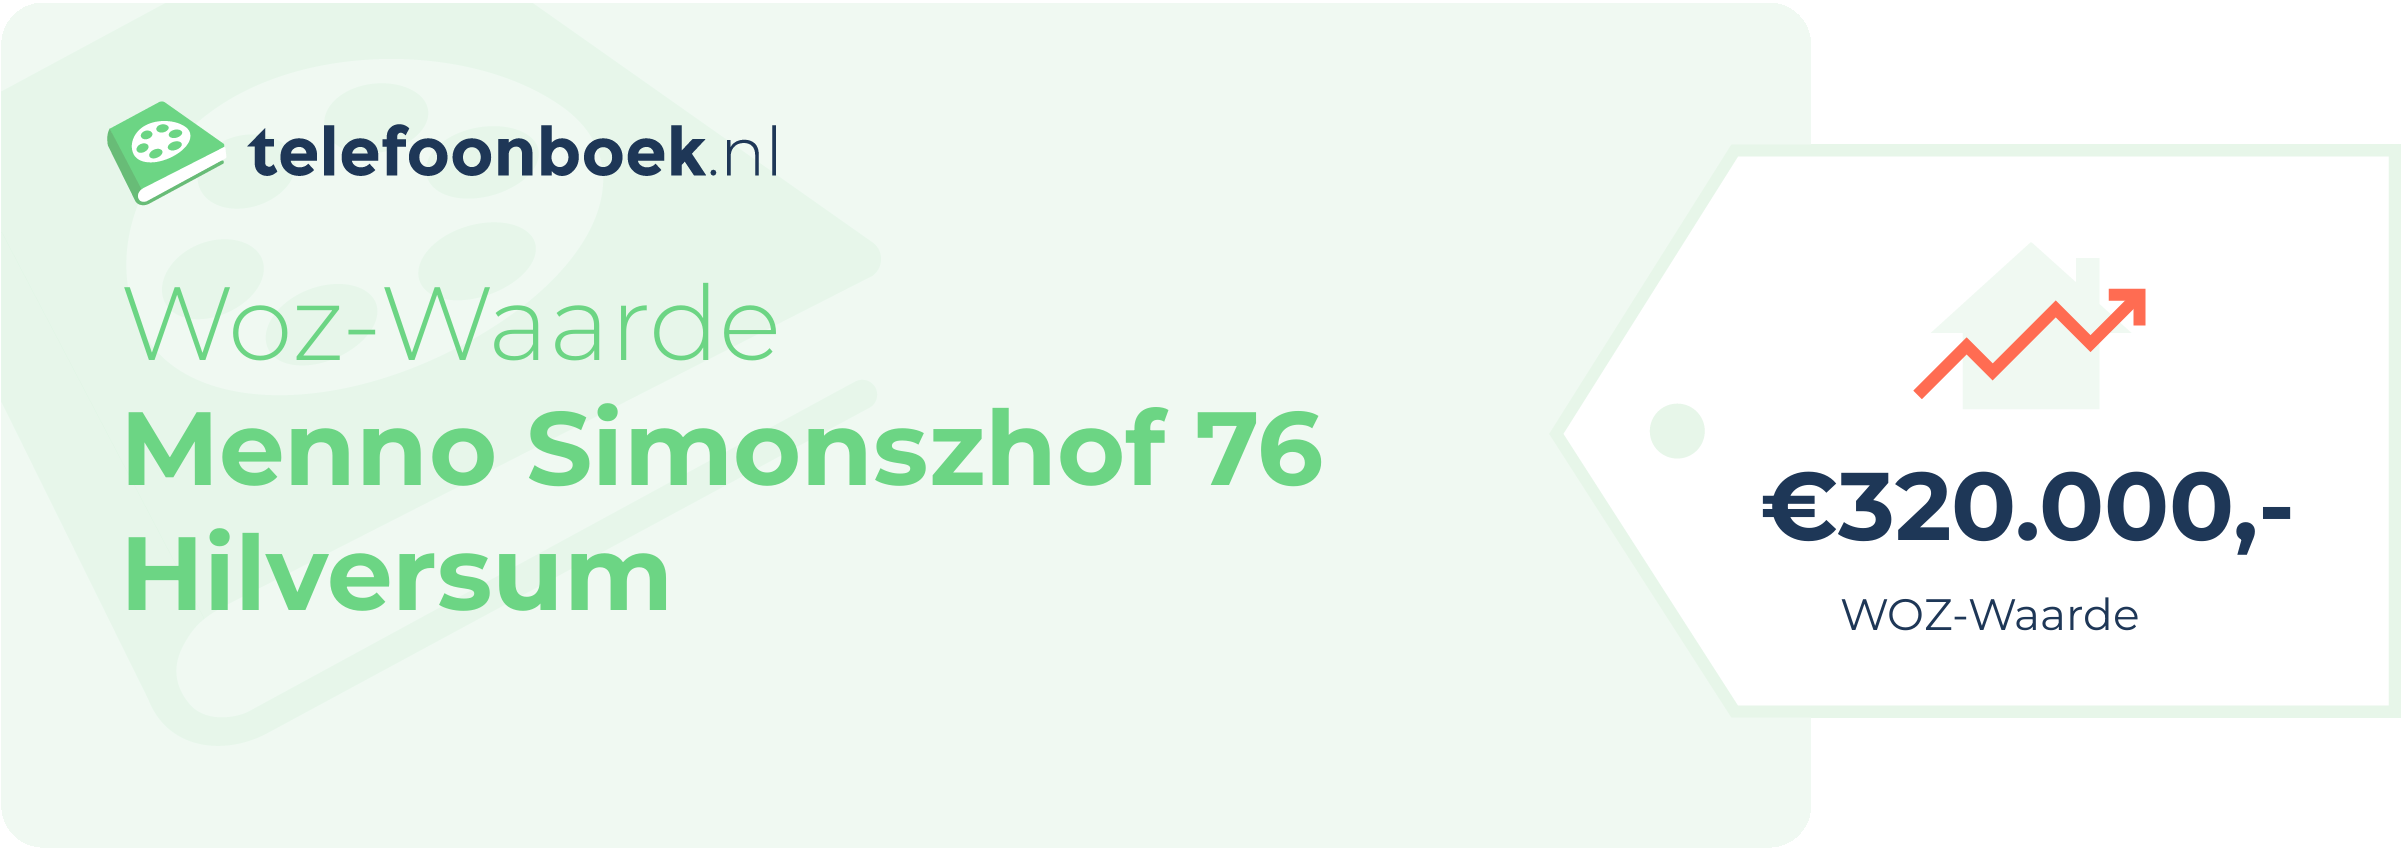 WOZ-waarde Menno Simonszhof 76 Hilversum